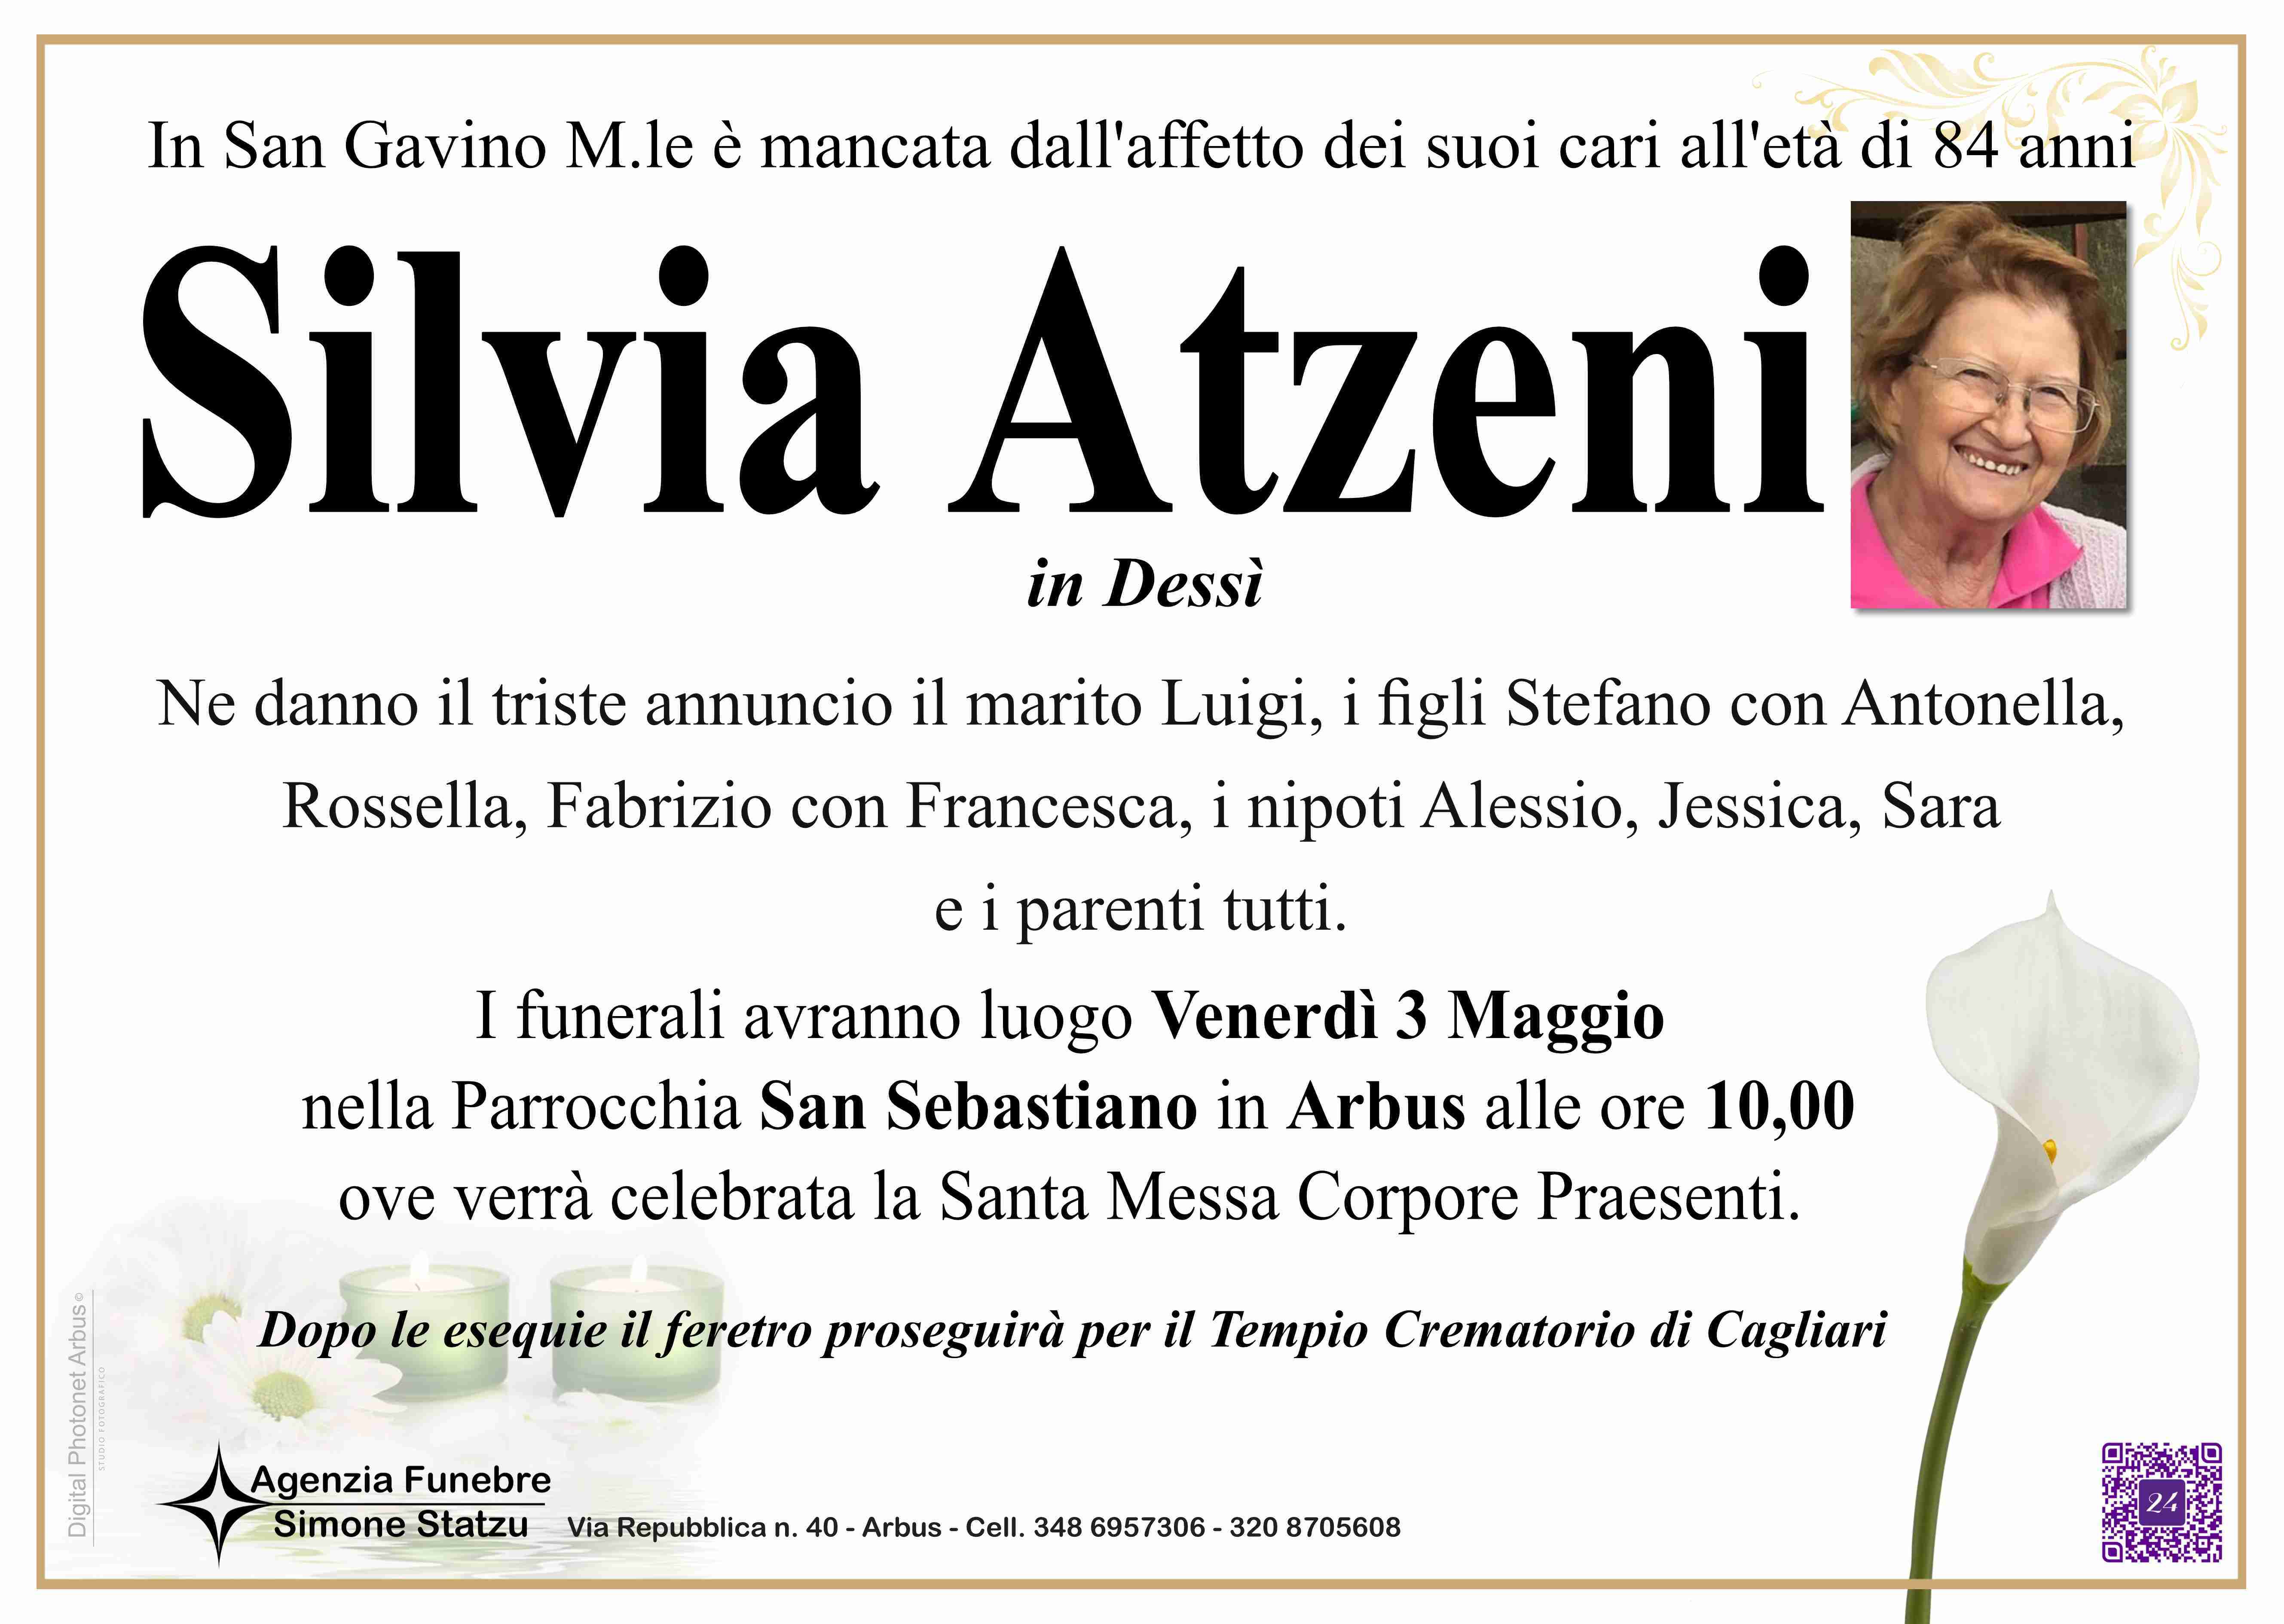 Silvia Atzeni